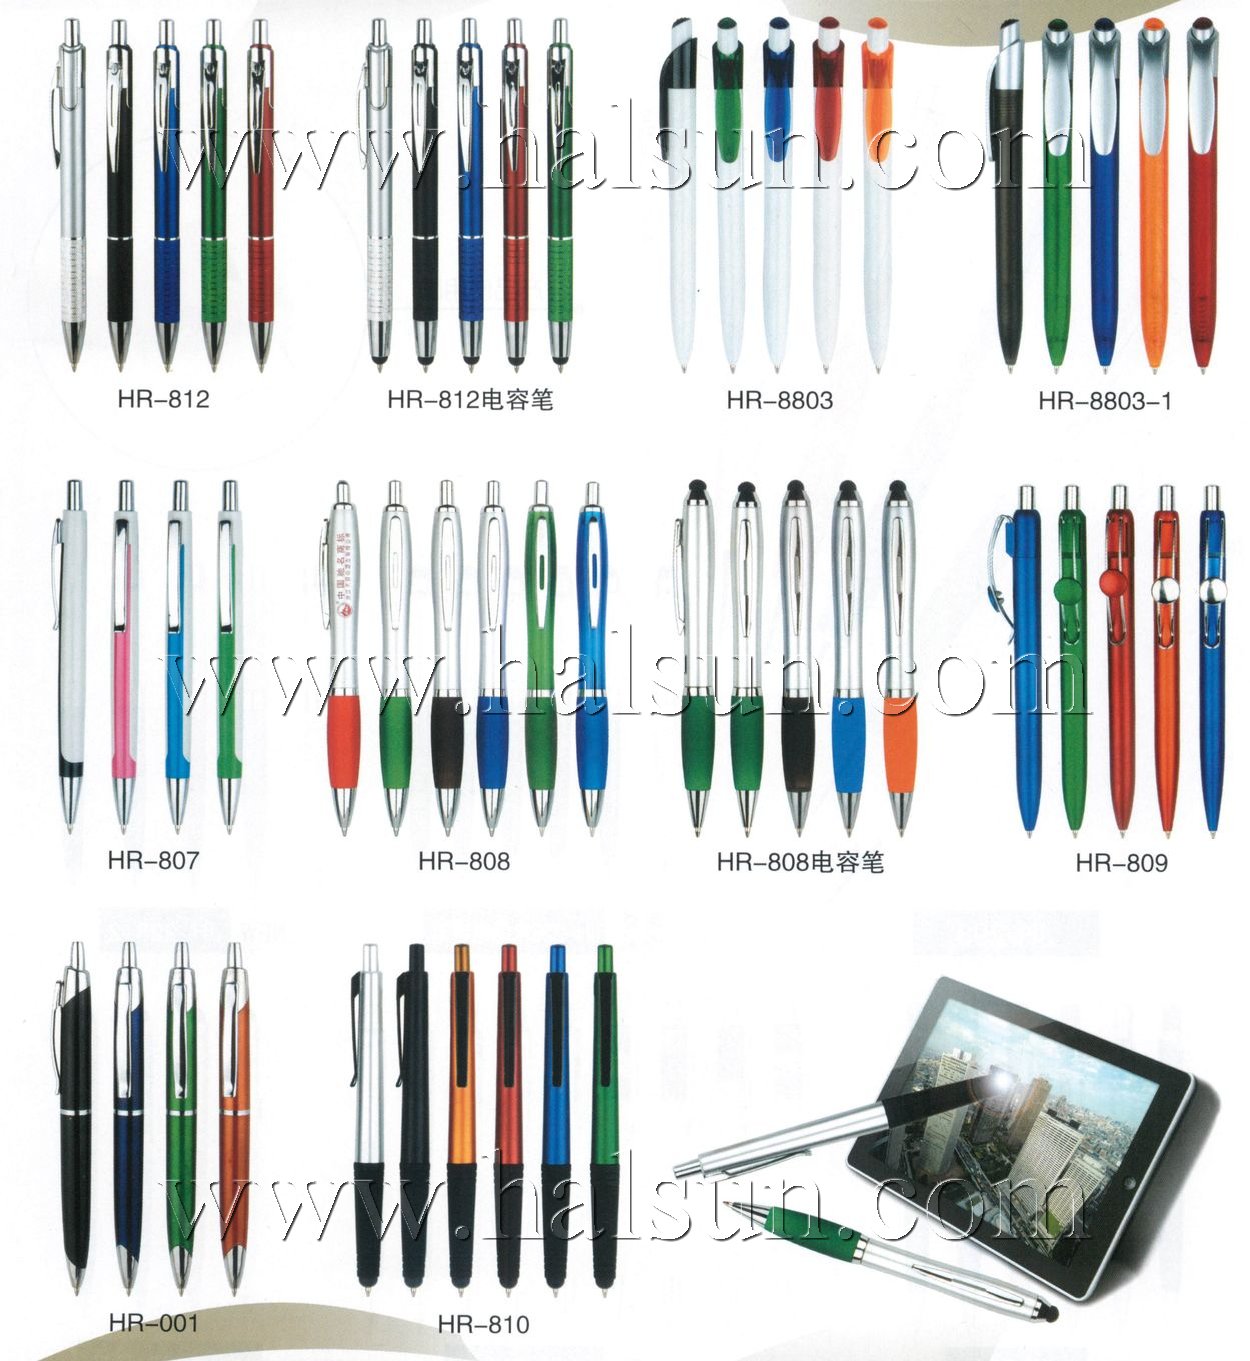 Stylus Pens,Promotional Ballpoint Pens_2014_09_21_15_22_27